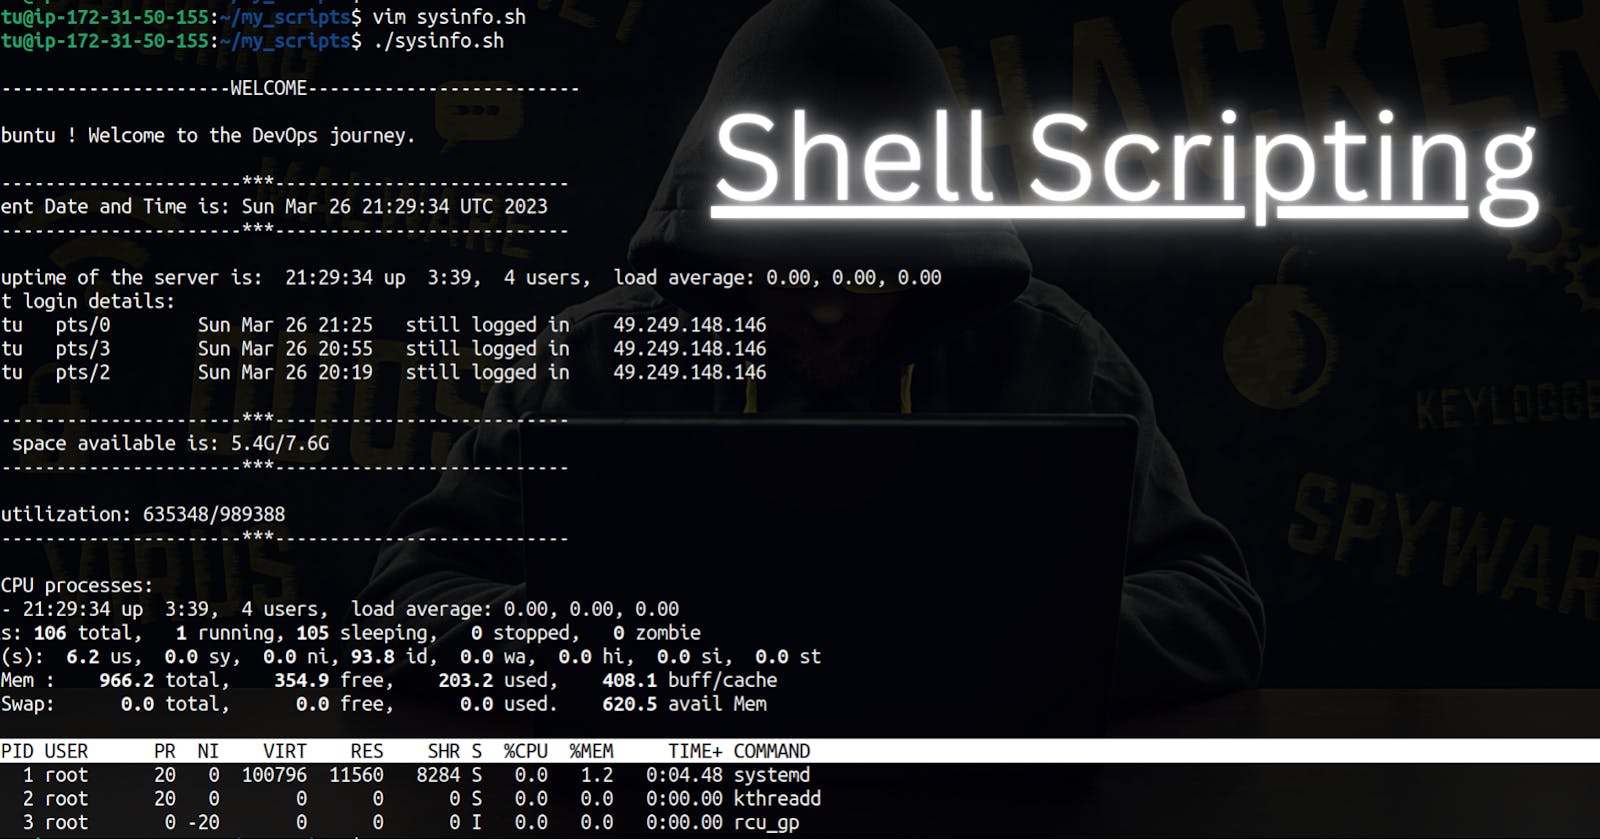 Shell Scripting mini project.